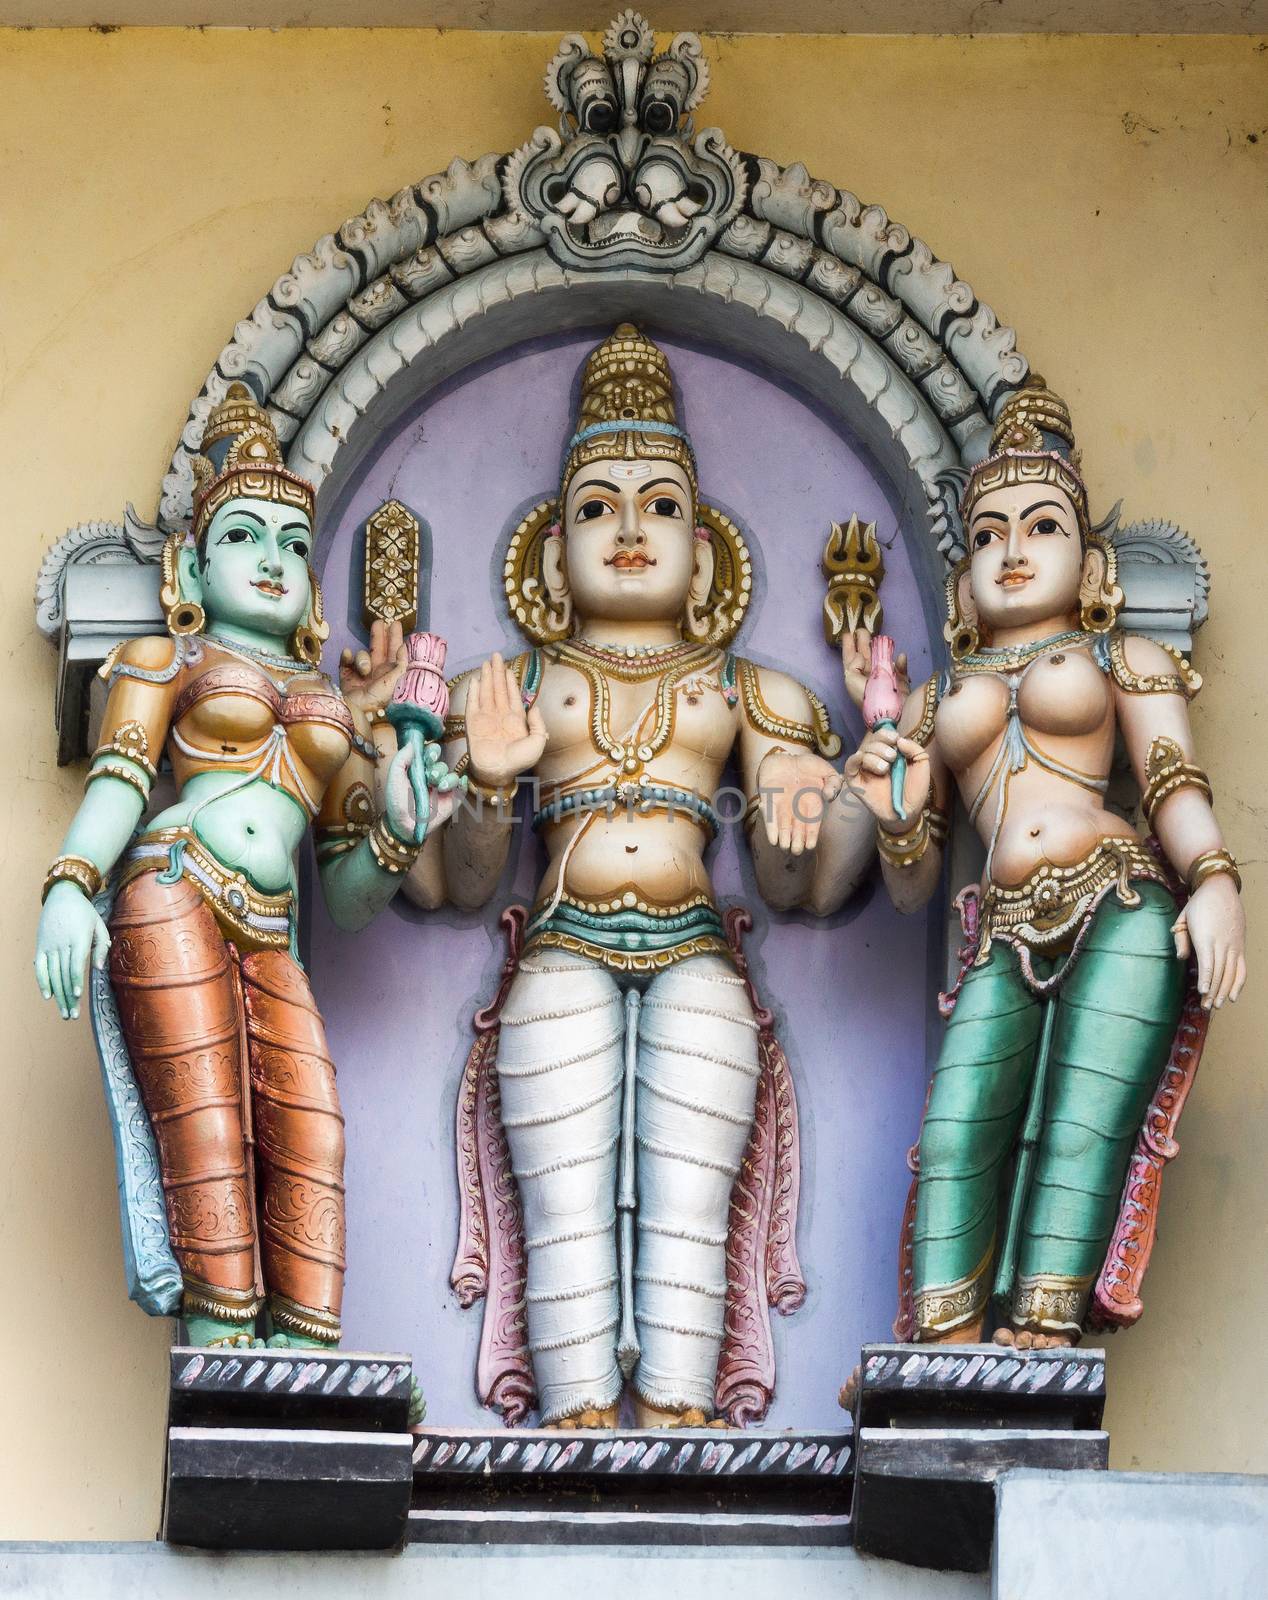 Lord Murugan and his two wives, Valli and Deivayanai at Rathinagiri Hill Temple in Vellore, Tamil Nadu, India.